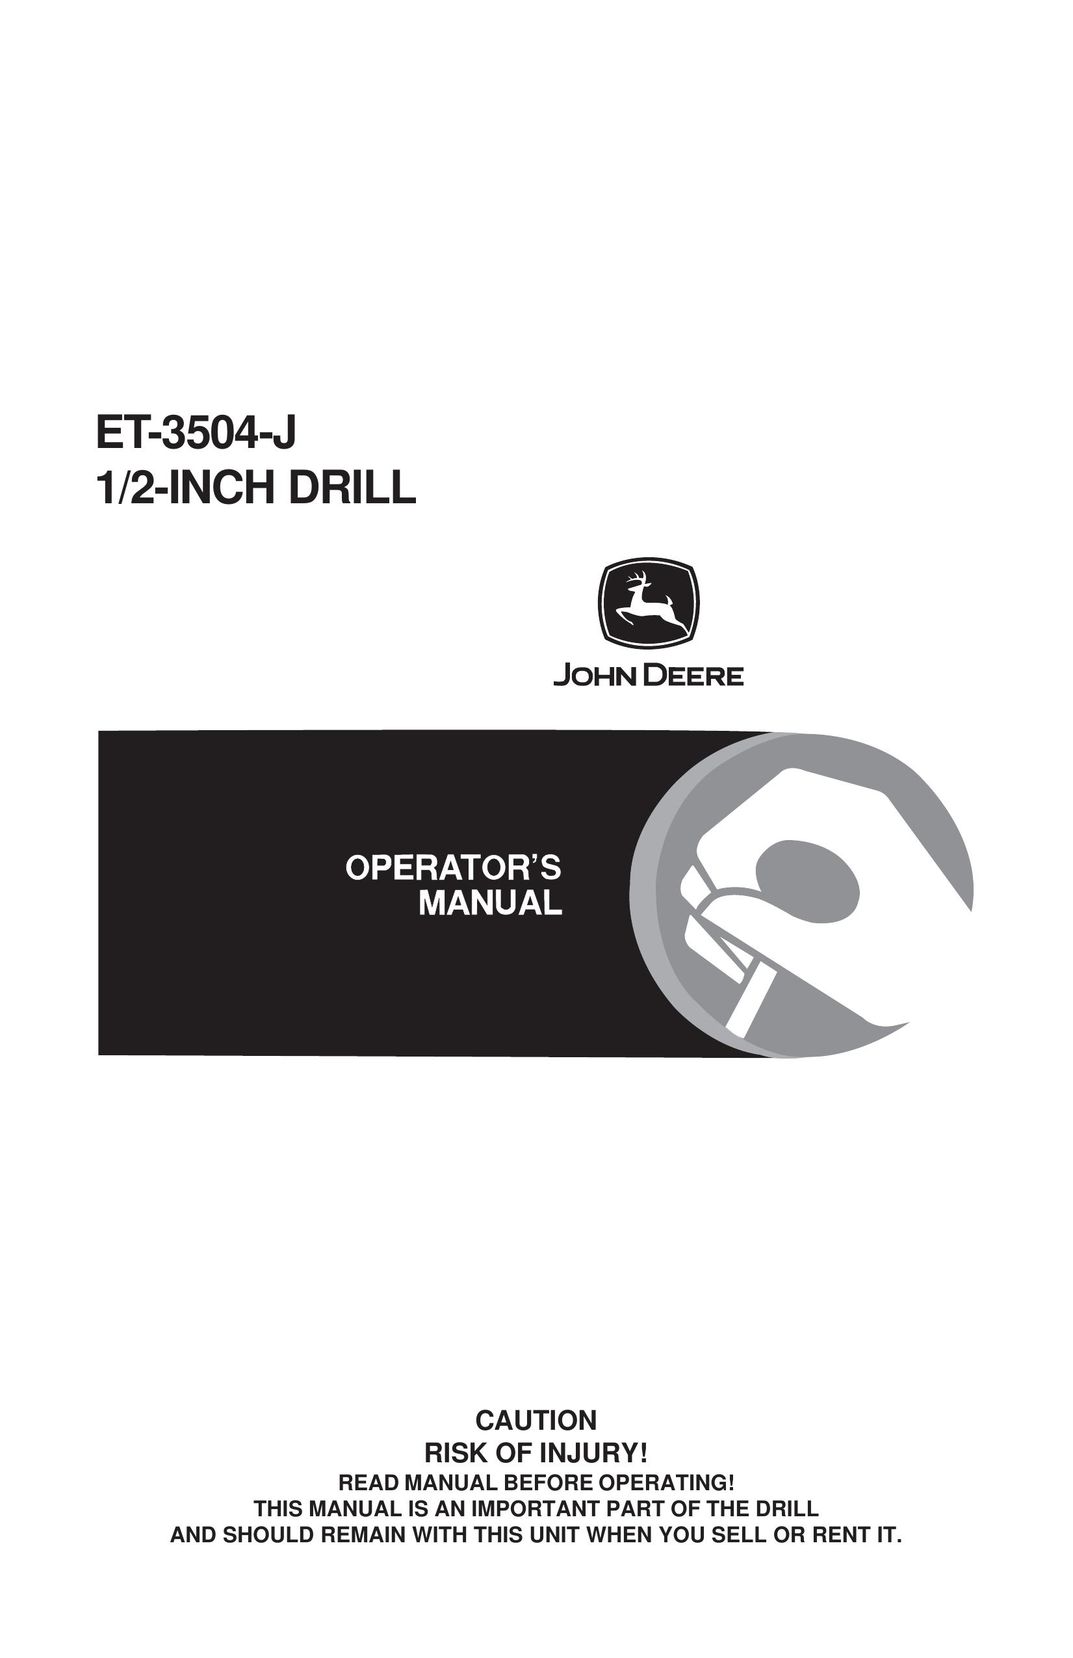 John Deere ET-3504-J Drill User Manual